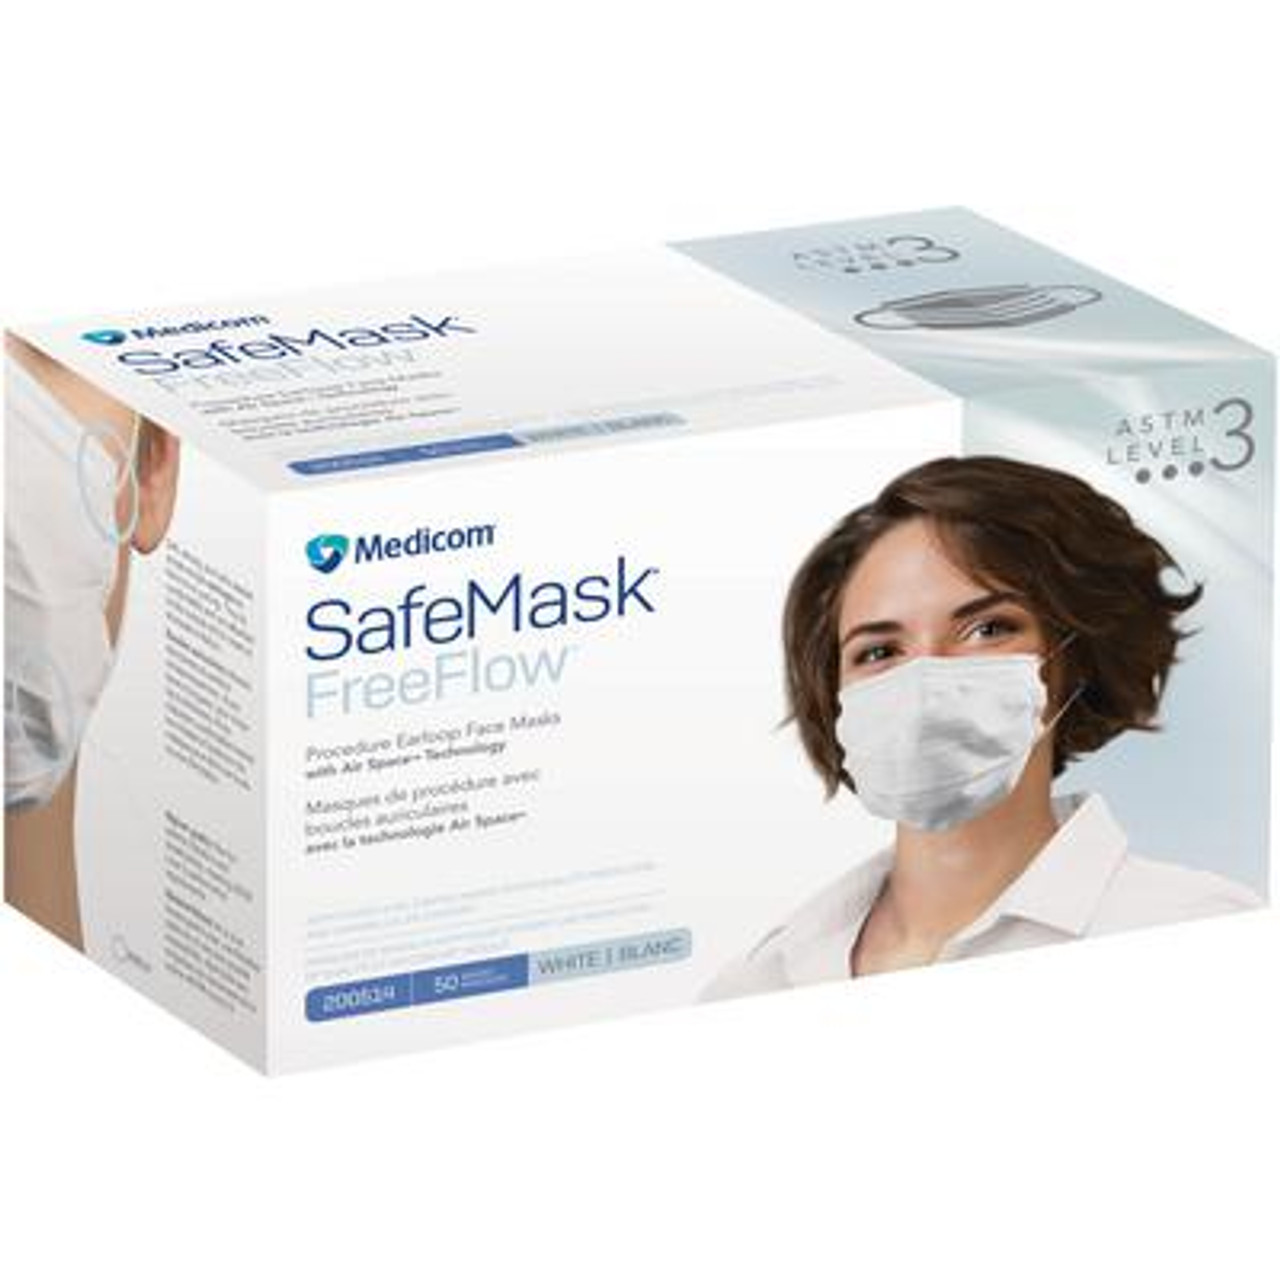 Medicom SafeMask FreeFlow Earloop Mask, Level 3 White, 50/bx 200514